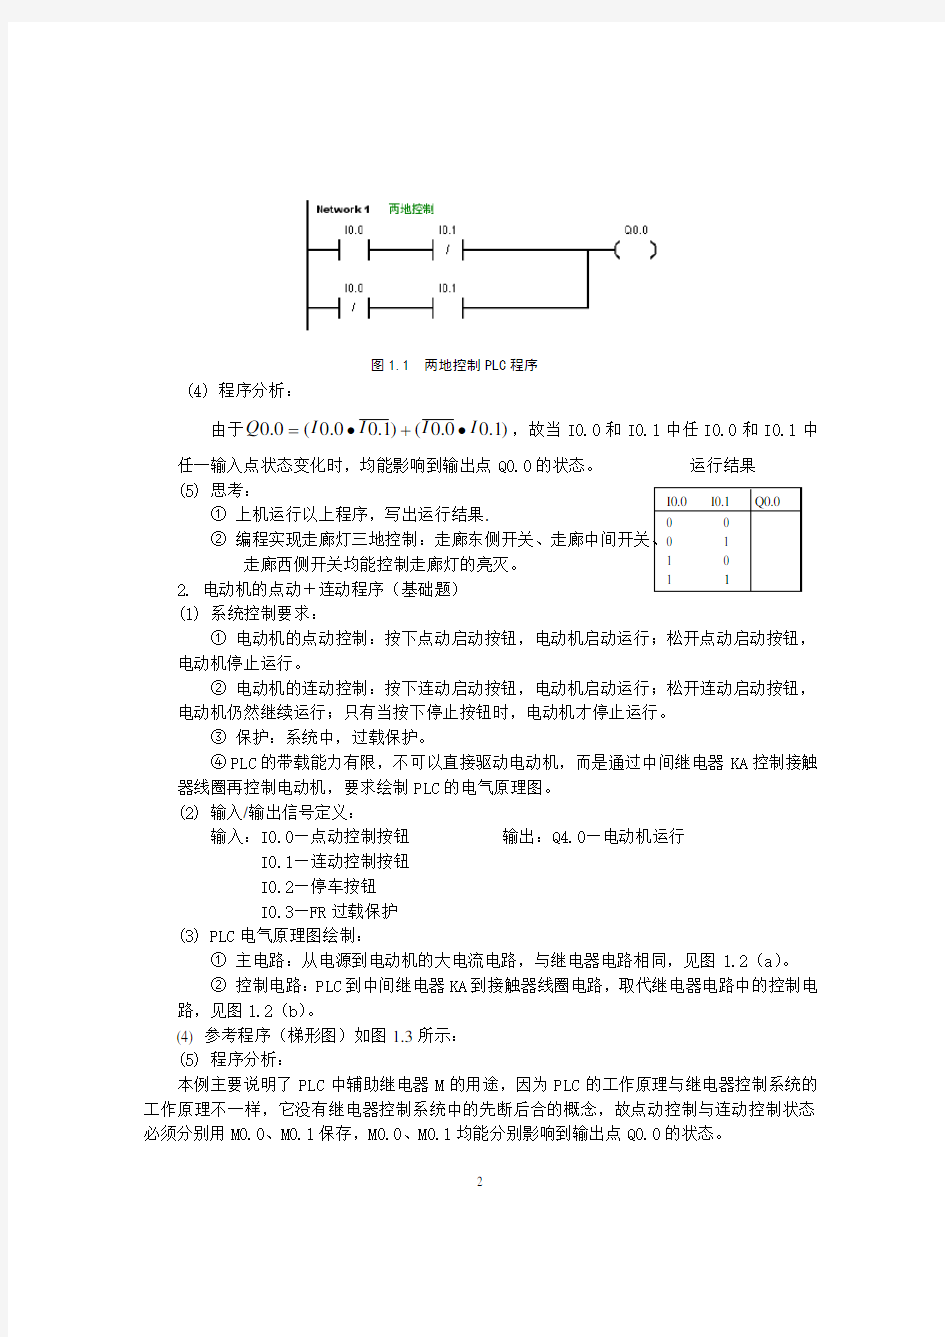 S7-300实验指导书(2013.06.24)